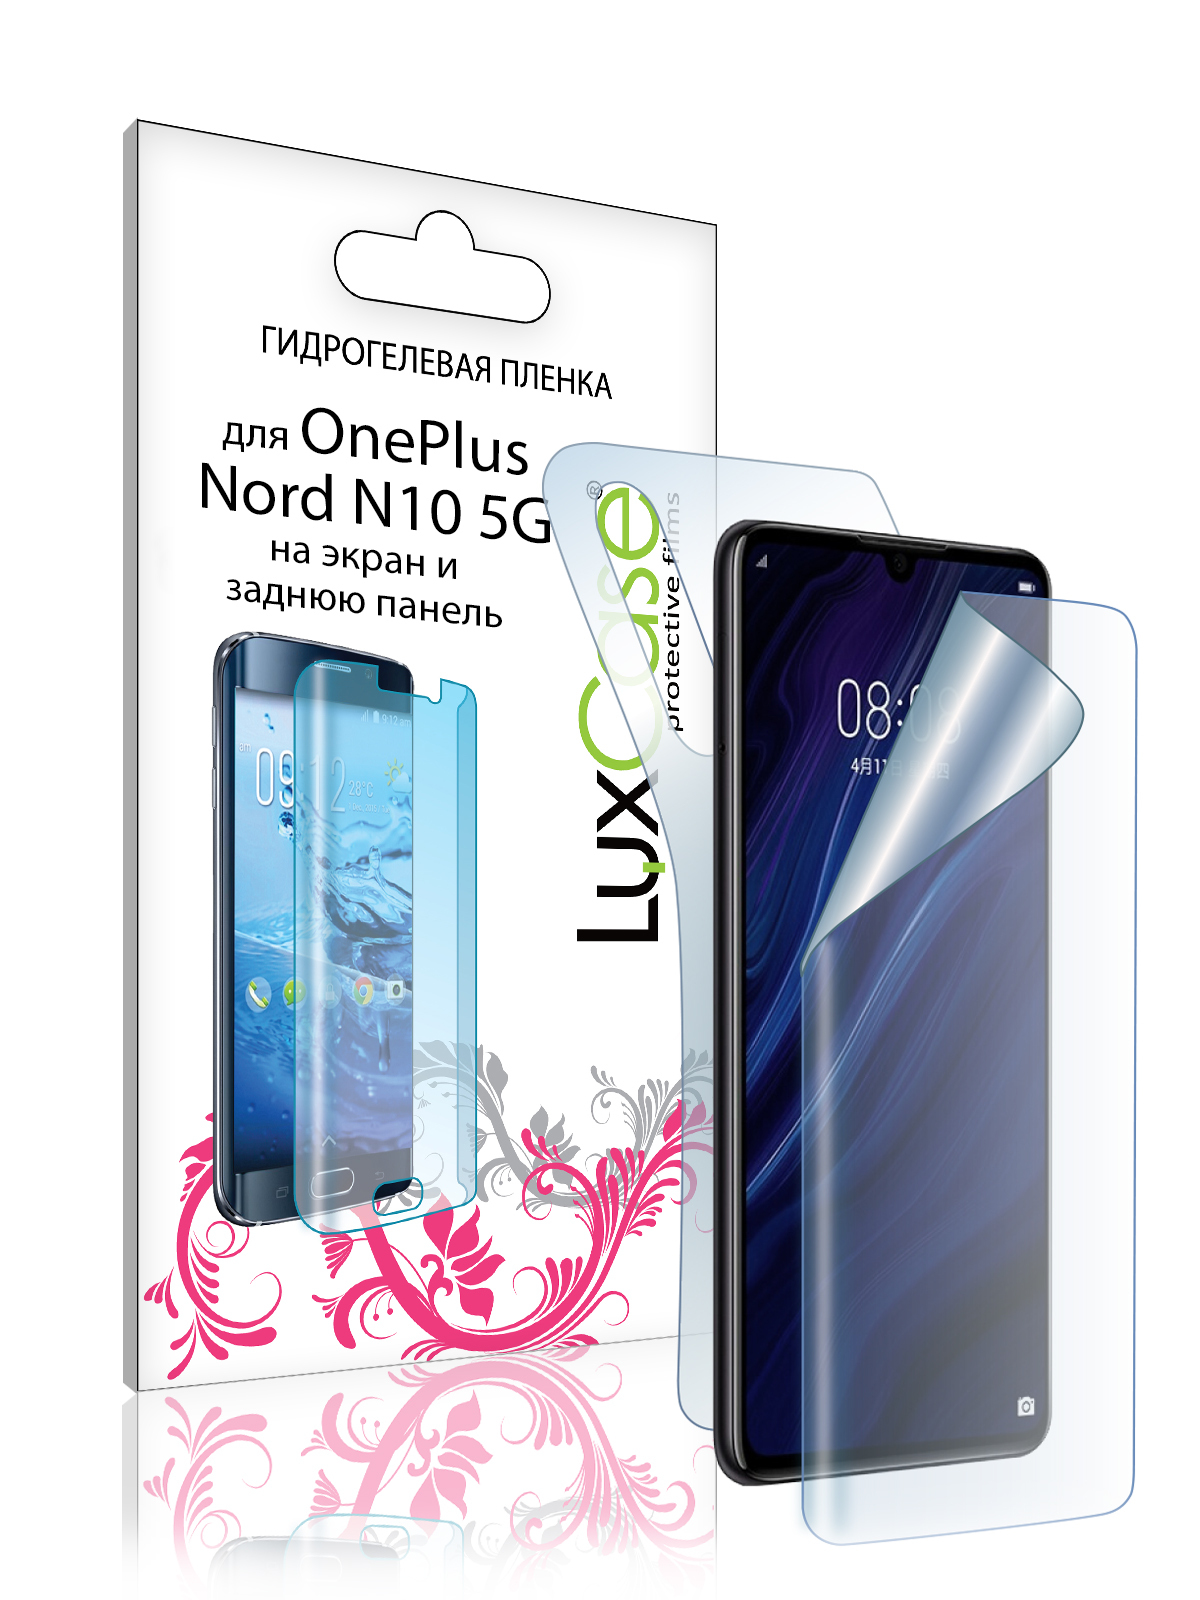 Пленка гидрогелевая LuxCase для OnePlus Nord N10 5G 0.14mm Front and Back Transparent 86565 защитная пленка luxcase для oneplus 7t front and back 0 14mm transparent 86158